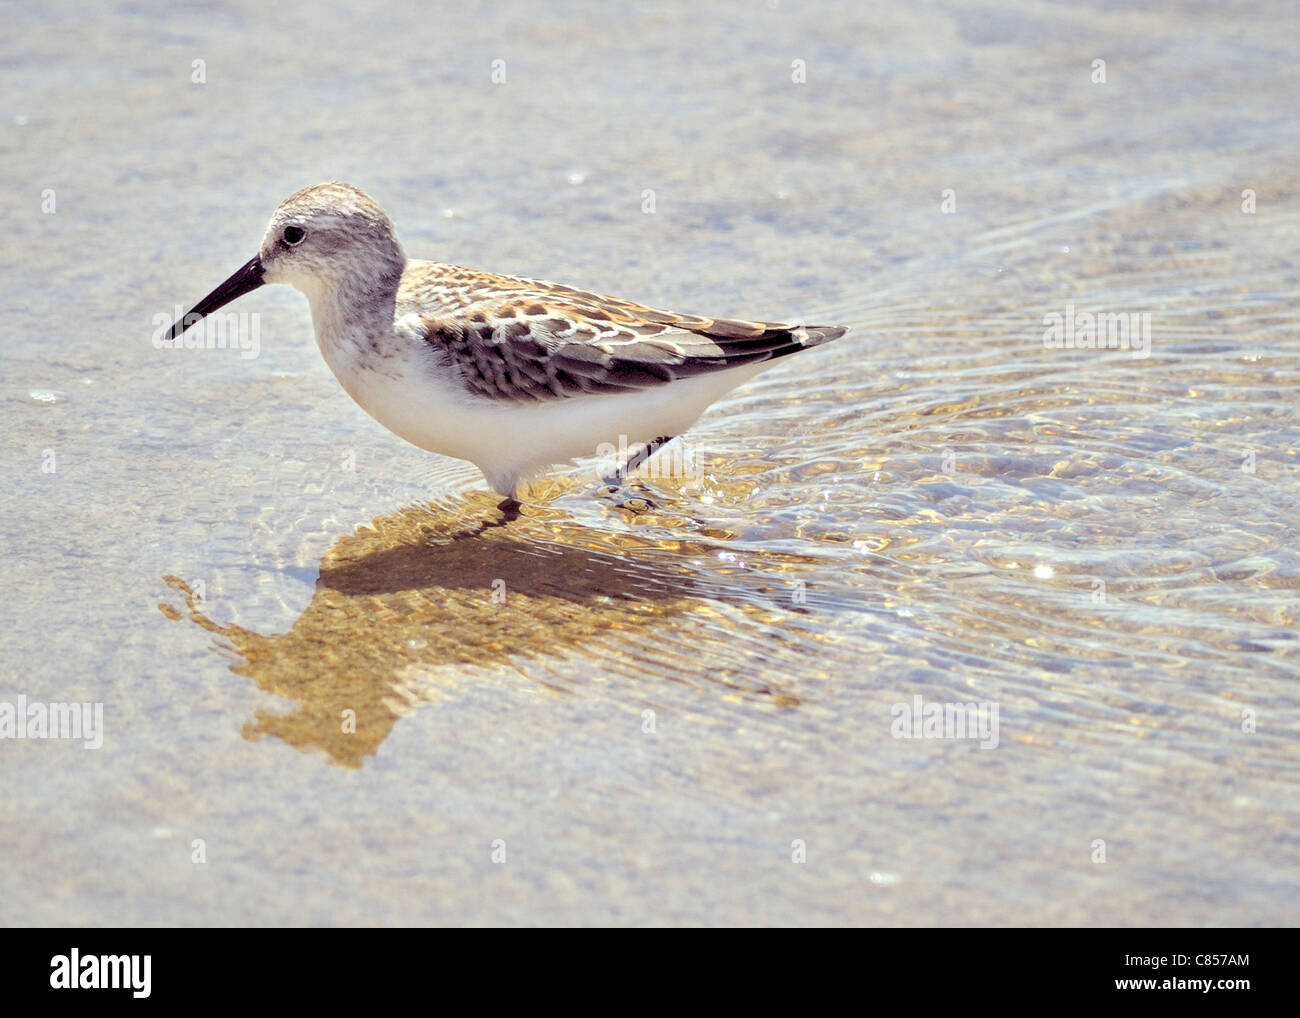 A Western Sandpiper bird- Calidris mauri, seen here standing on the shore. Stock Photo